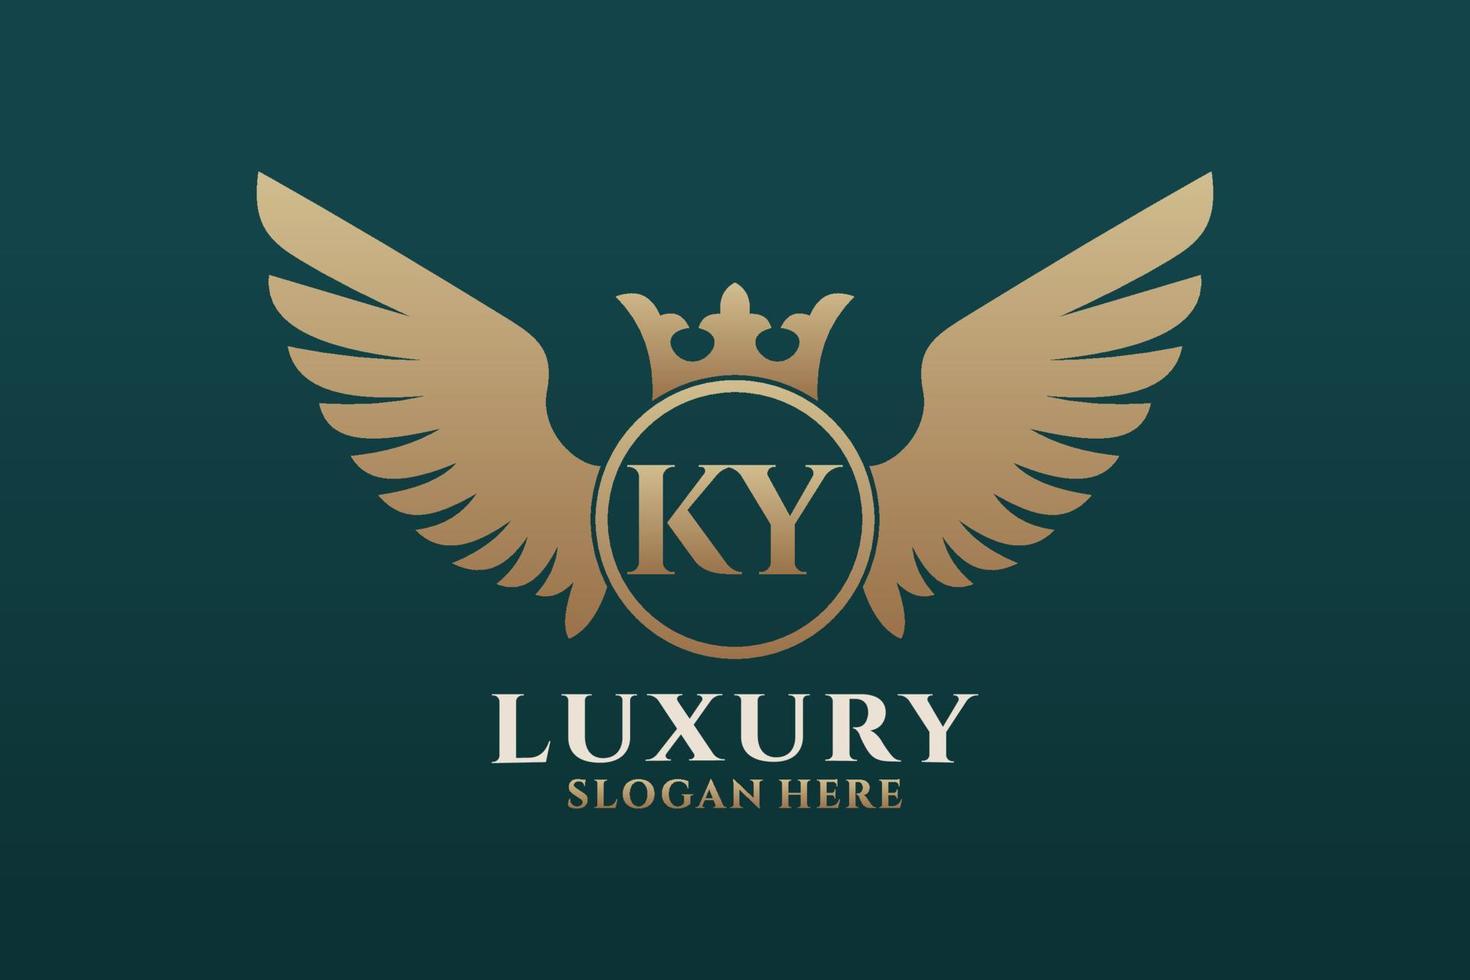 luxe Koninklijk vleugel brief ky kam goud kleur logo vector, zege logo, kam logo, vleugel logo, vector logo sjabloon.